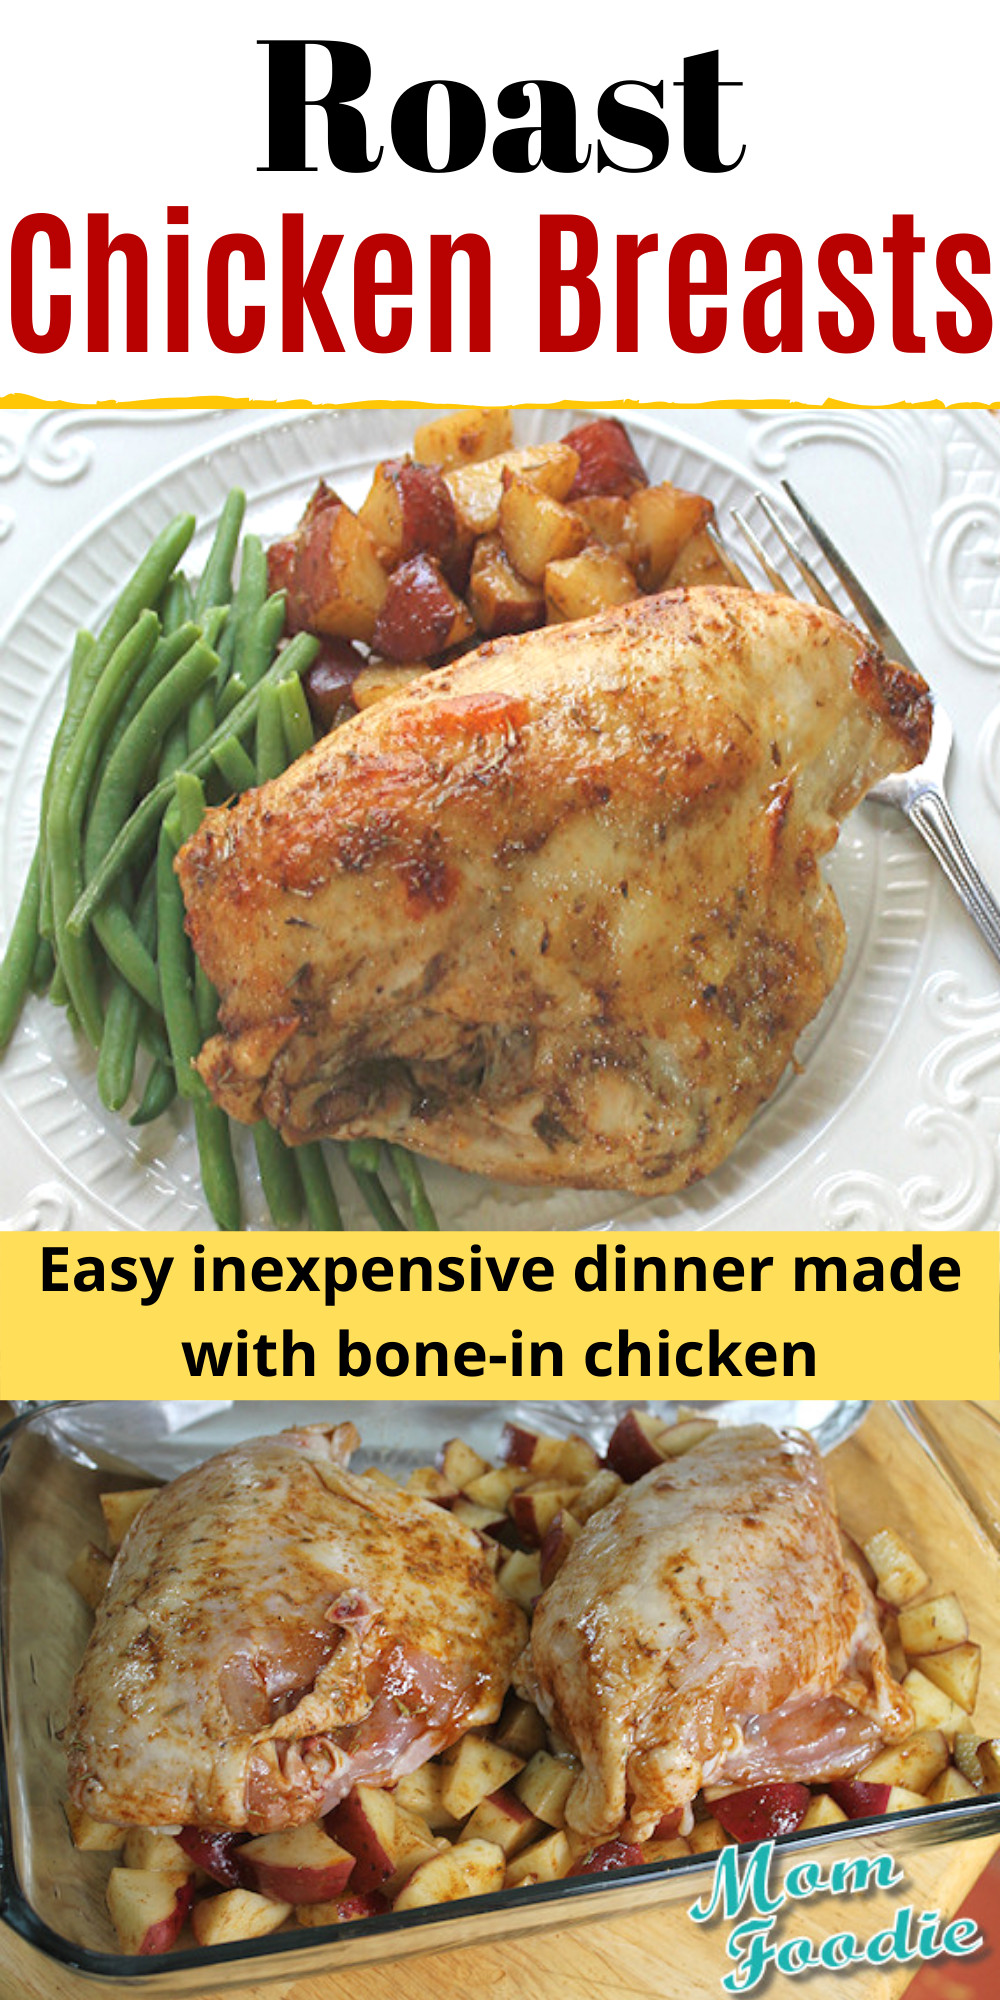 Bone In Chicken Recipes For Dinner
 Pin on Easy Dinner Recipes